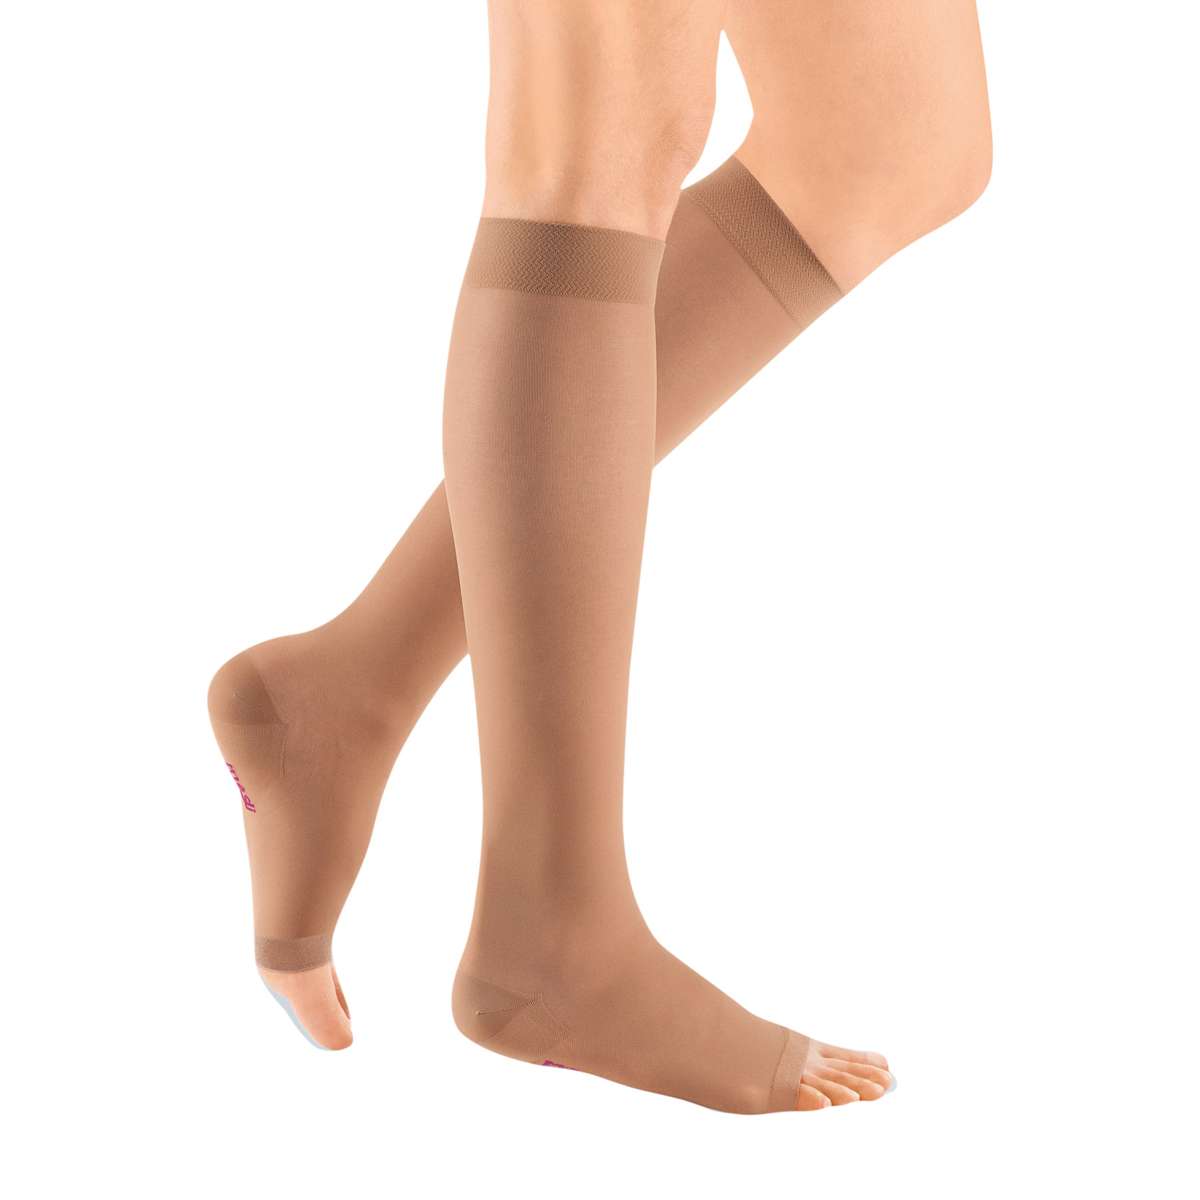 mediven sheer & soft 20-30 mmHg Calf High Open Toe Compression Stockings, Natural, I-Standard